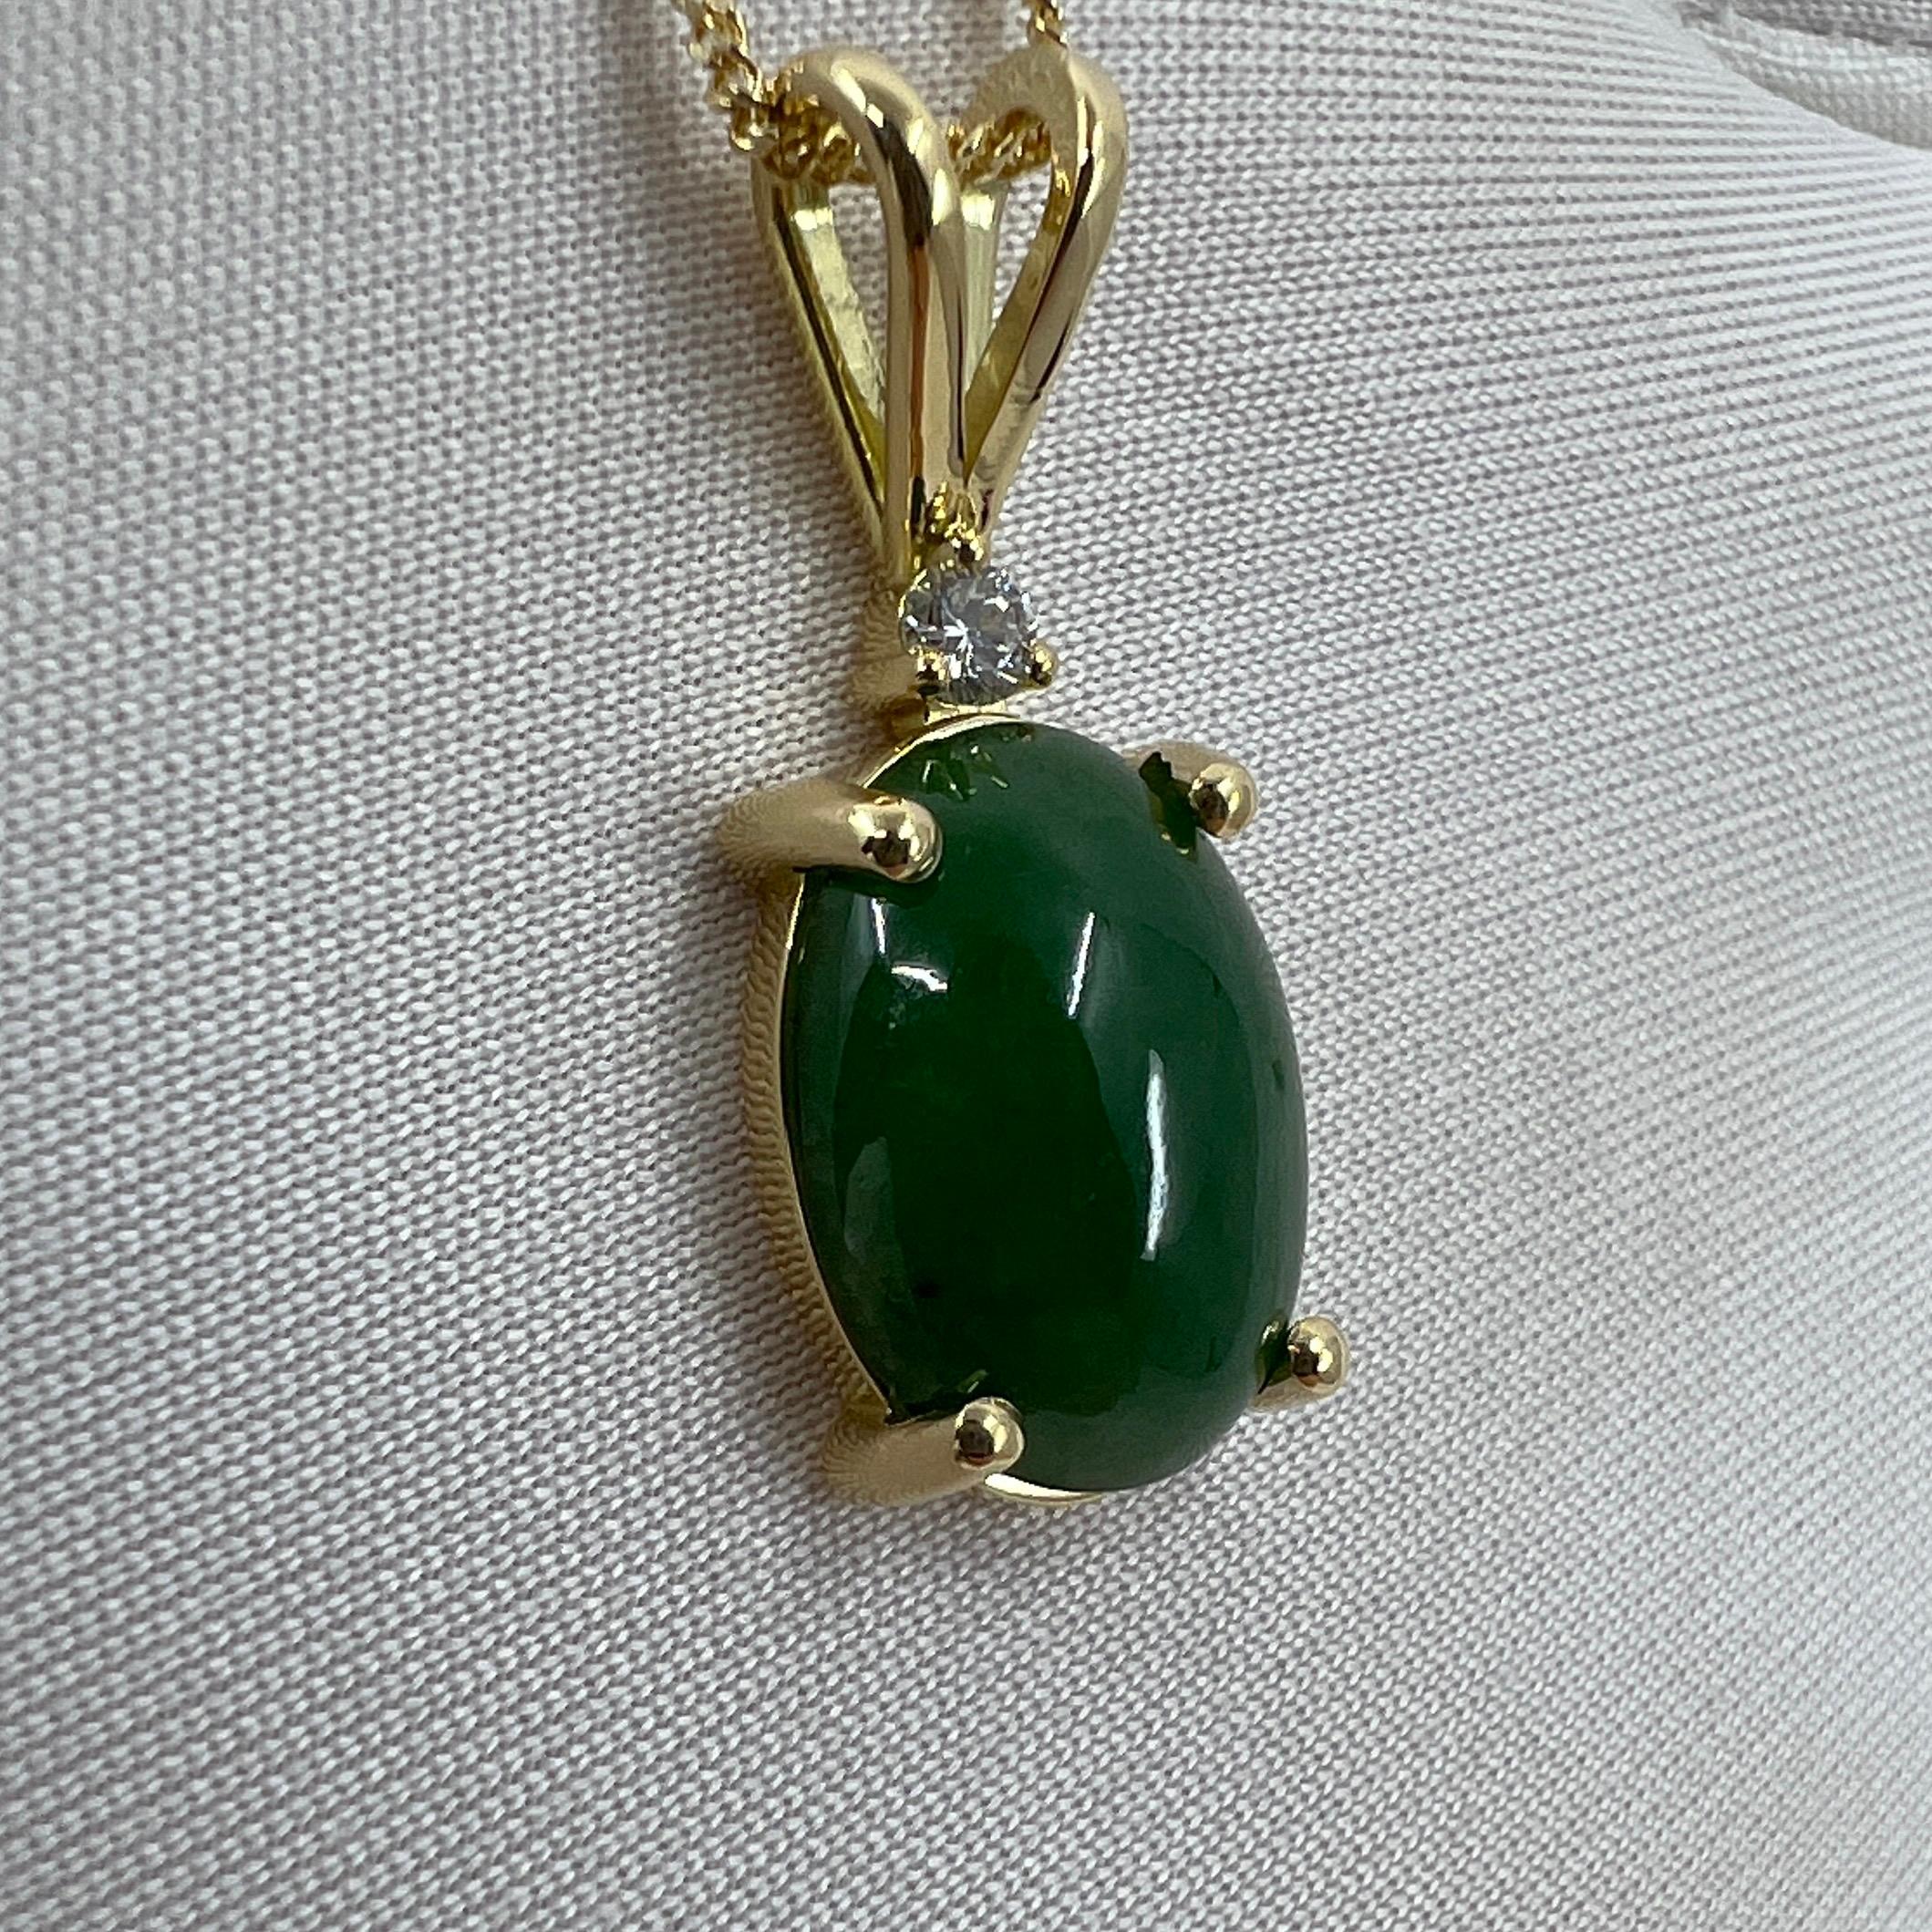 barbara hutton jadeite necklace